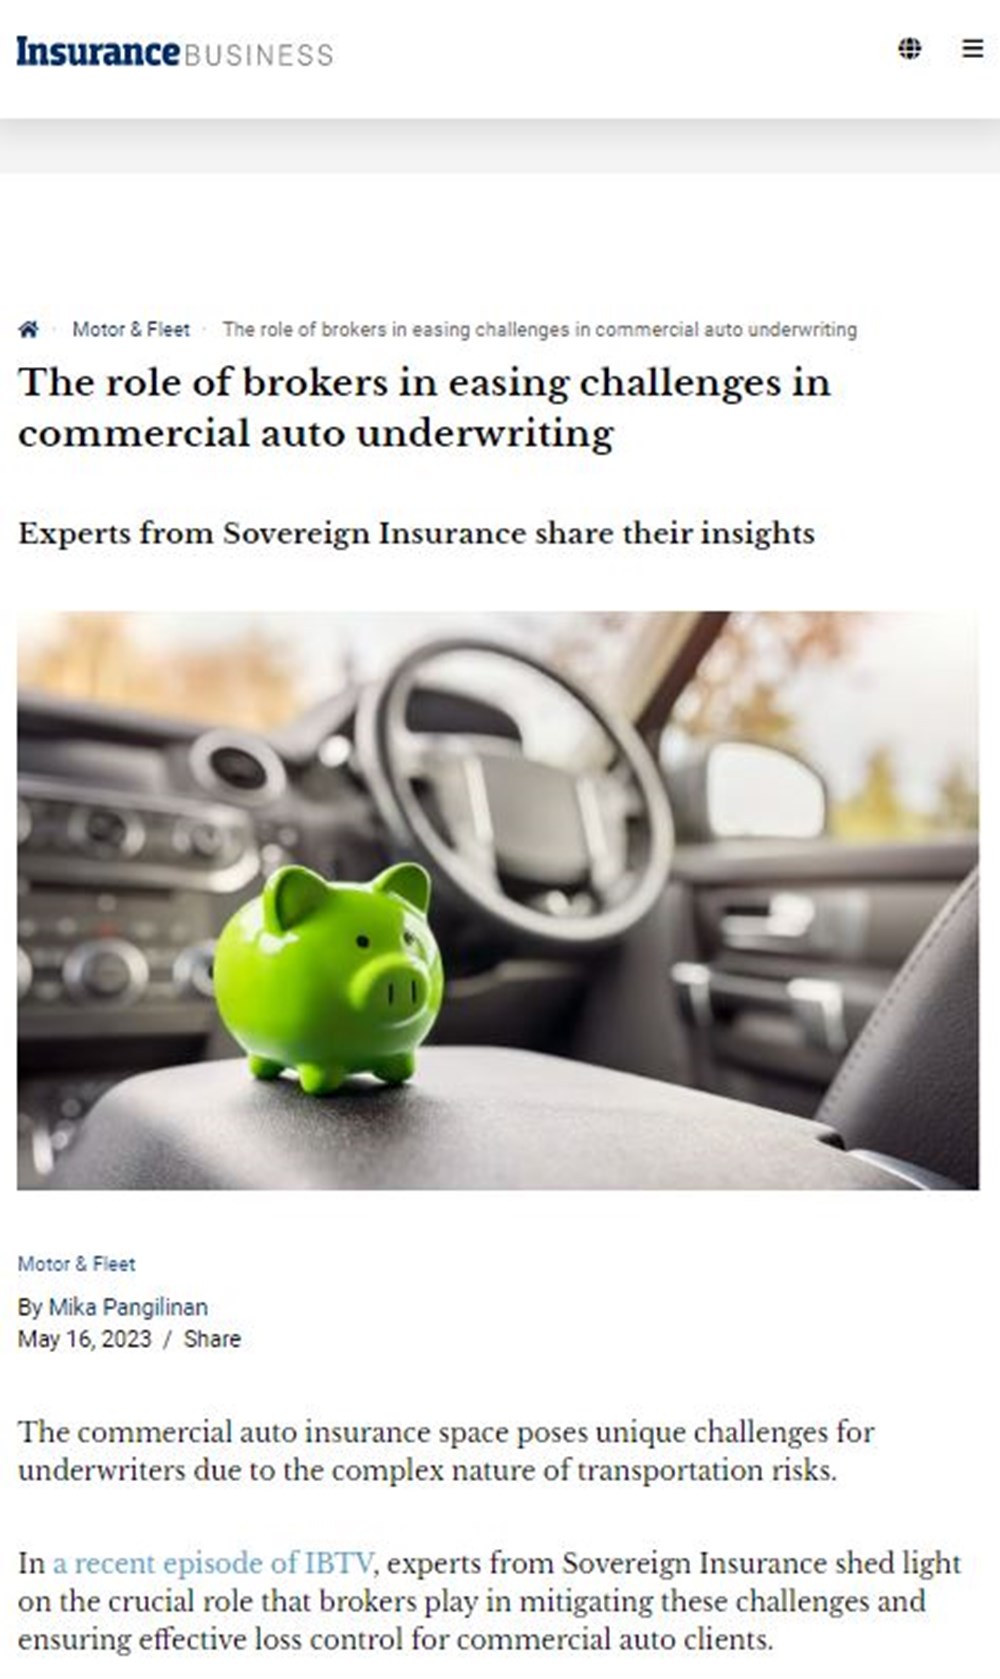 Une capture d'écran de l'article "the role of brokers in easing challenges in commercial auto underwriting" dans Insurance Business Magazine.